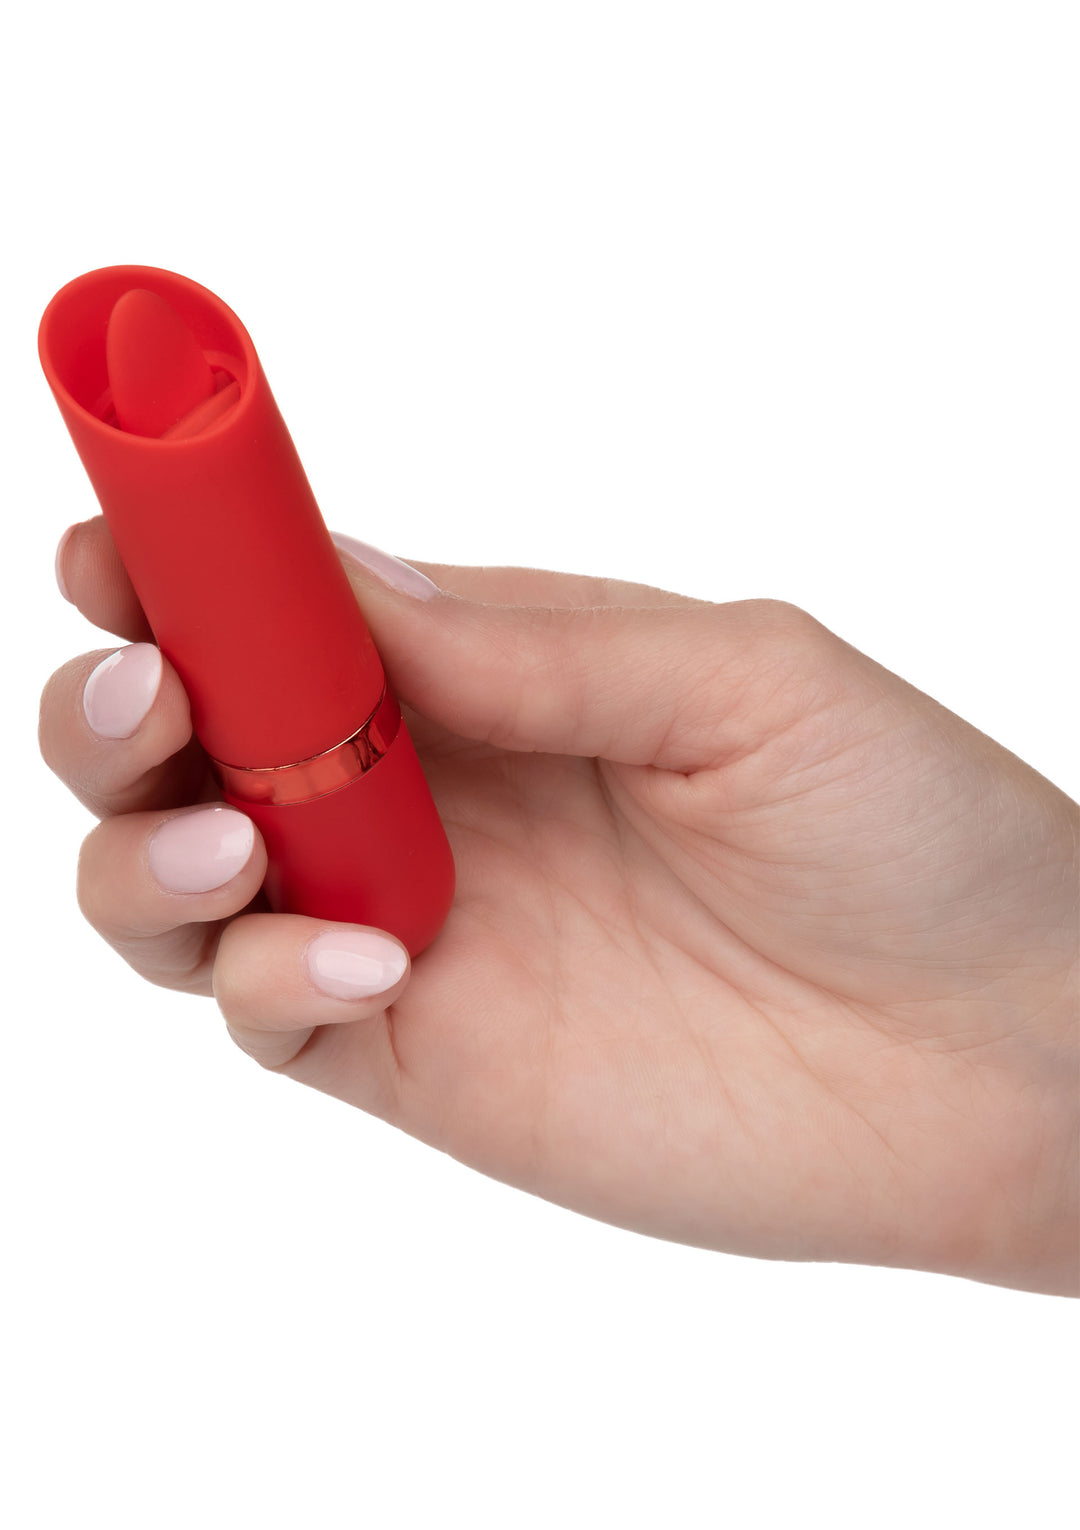 Kyst Flicker vibrating tongue stimulator